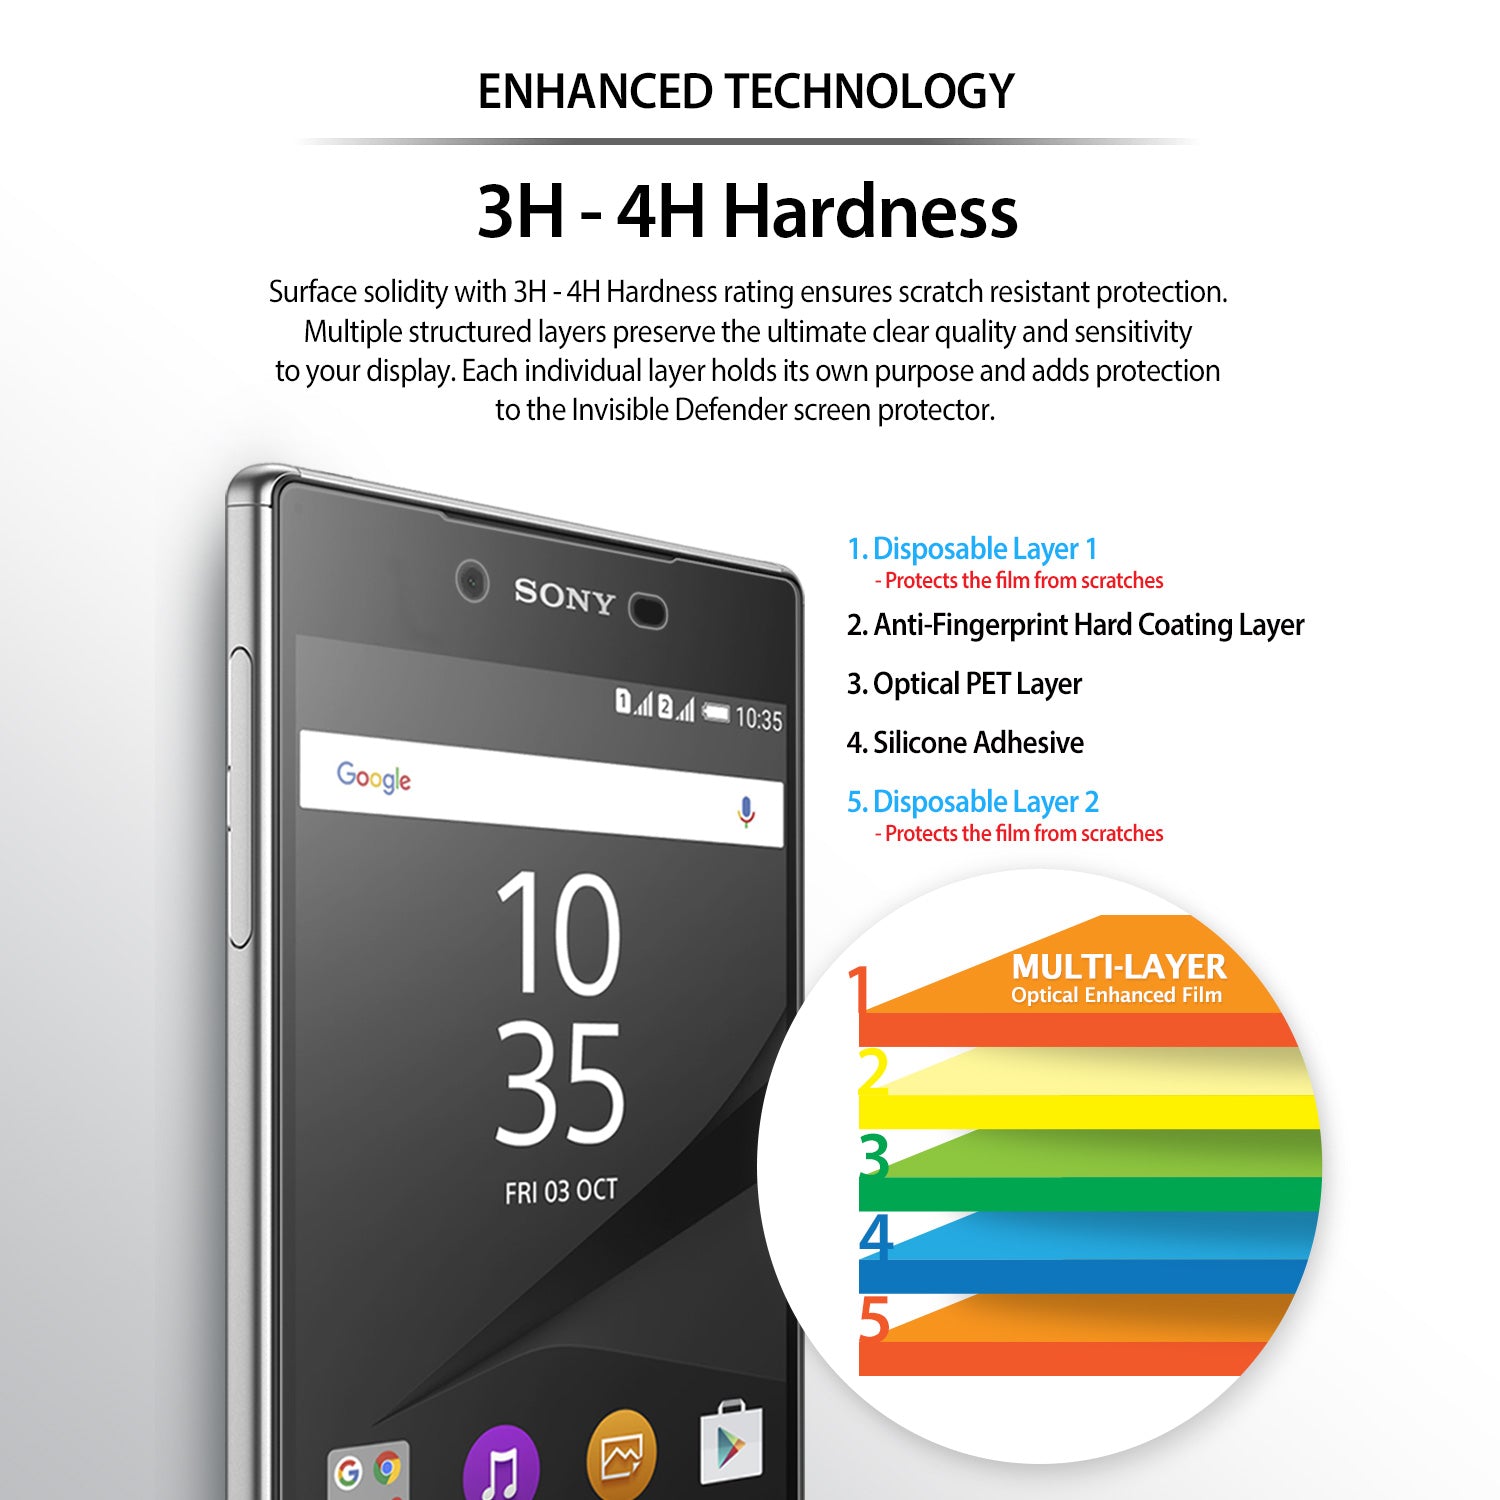 enhanced technology - 3h - 4h hardness